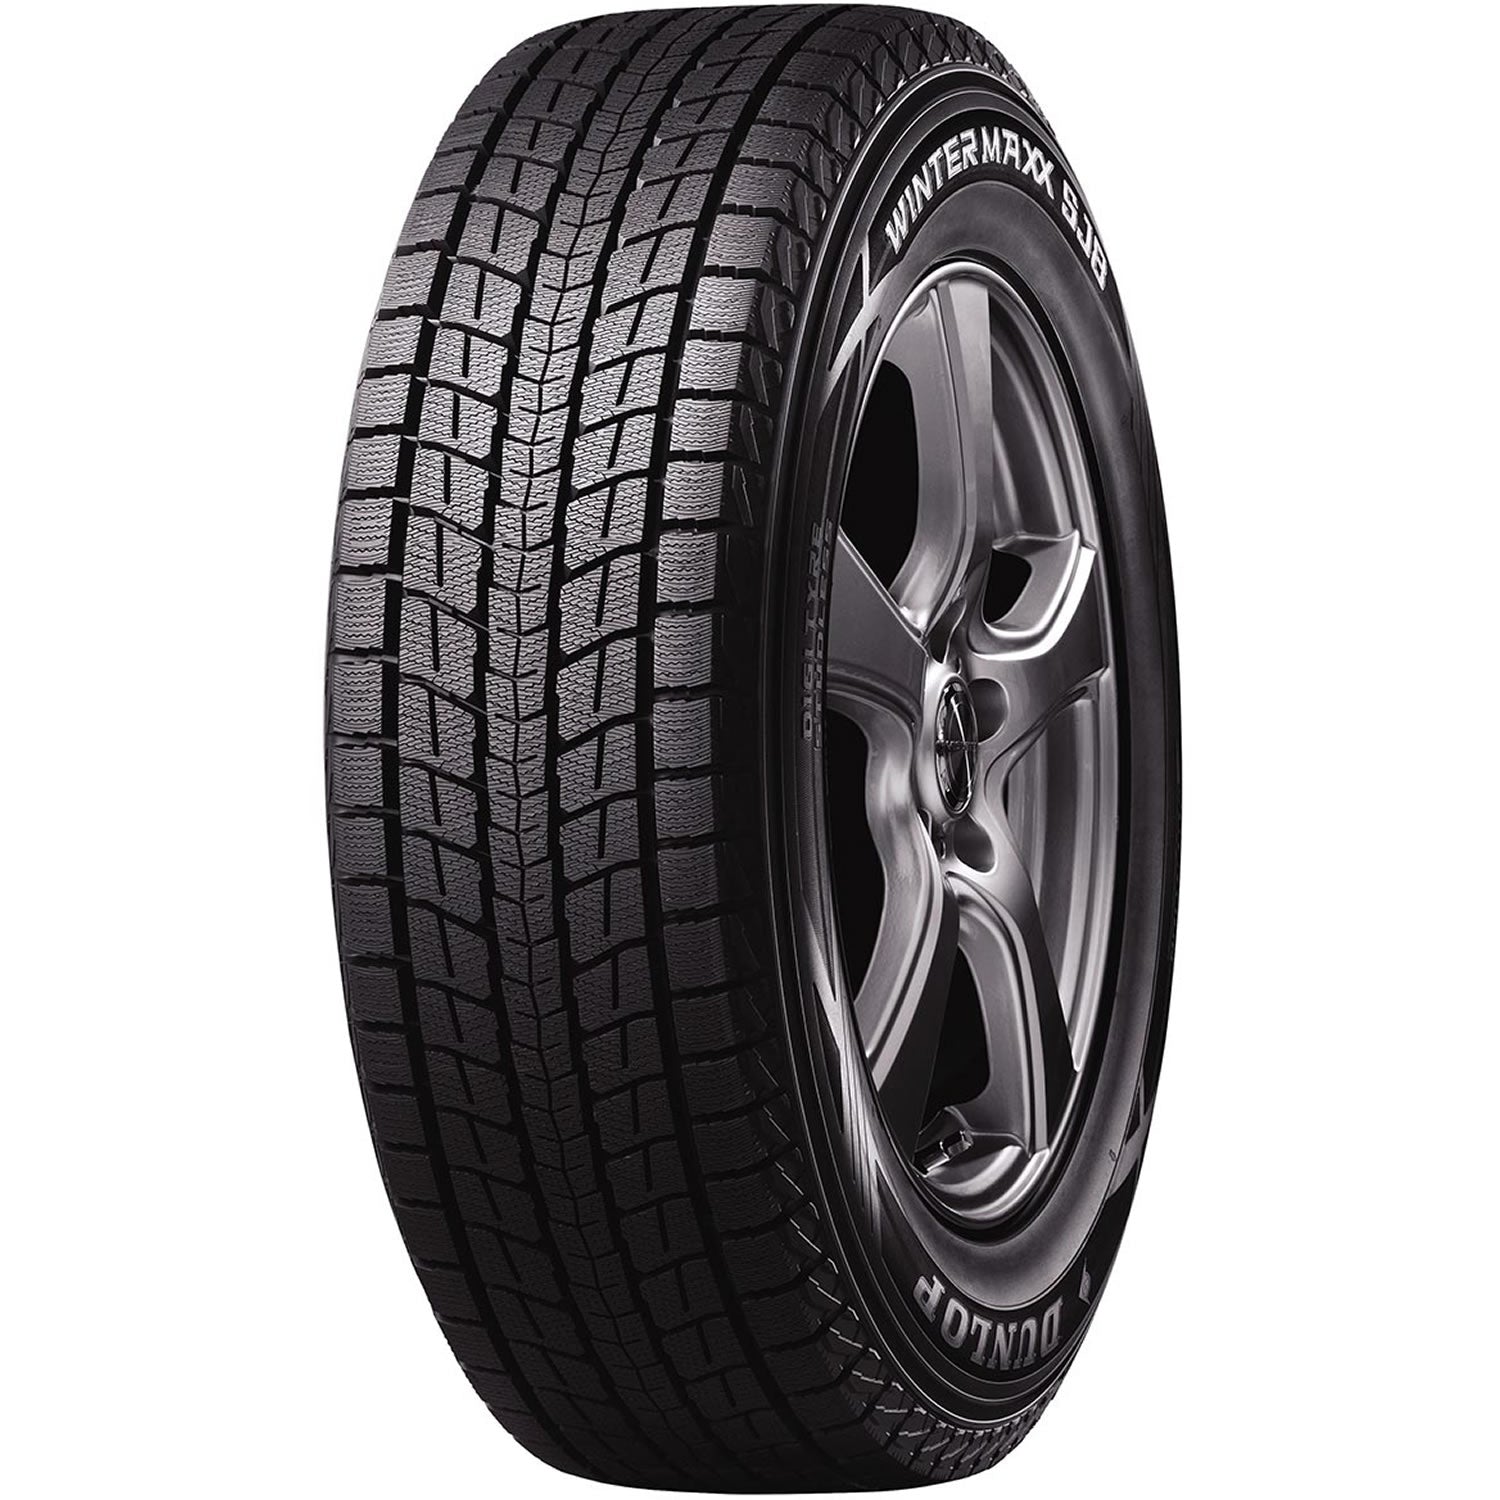 DUNLOP WINTER MAXX SJ8 285/50R20 (31.2X11.2R 20) Tires